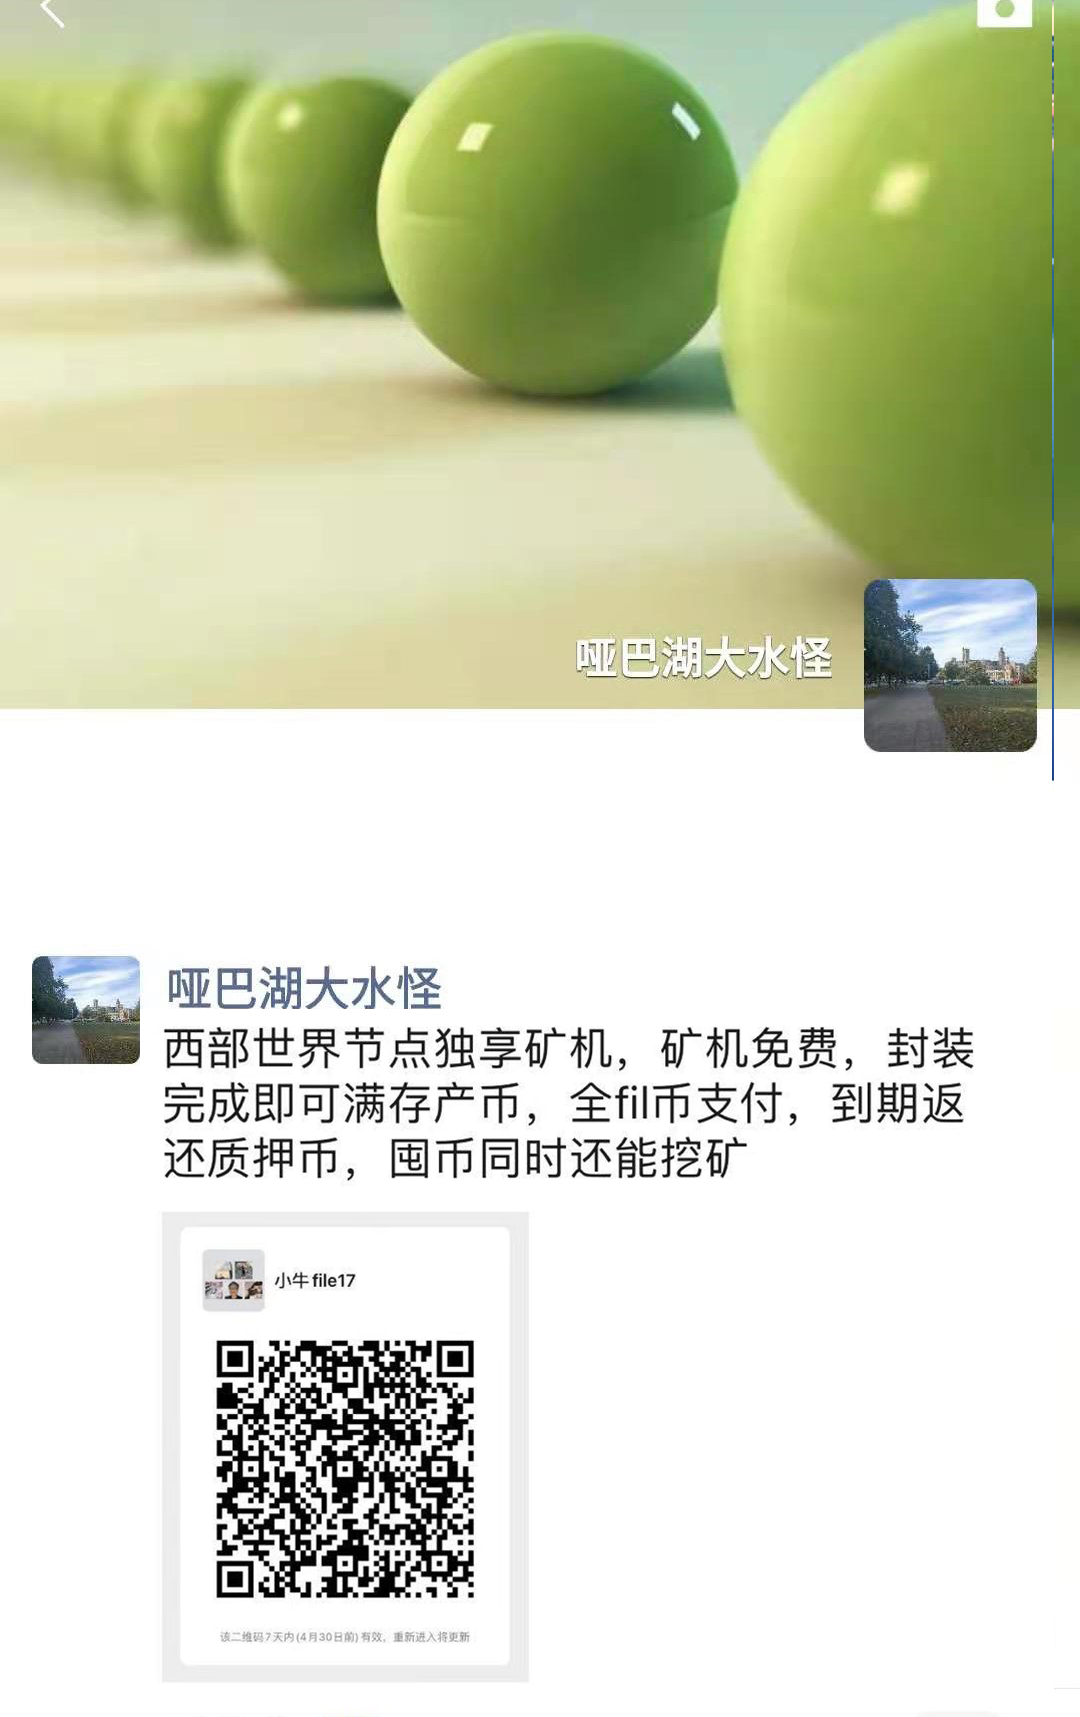 WeChat Image_2021033046543.png